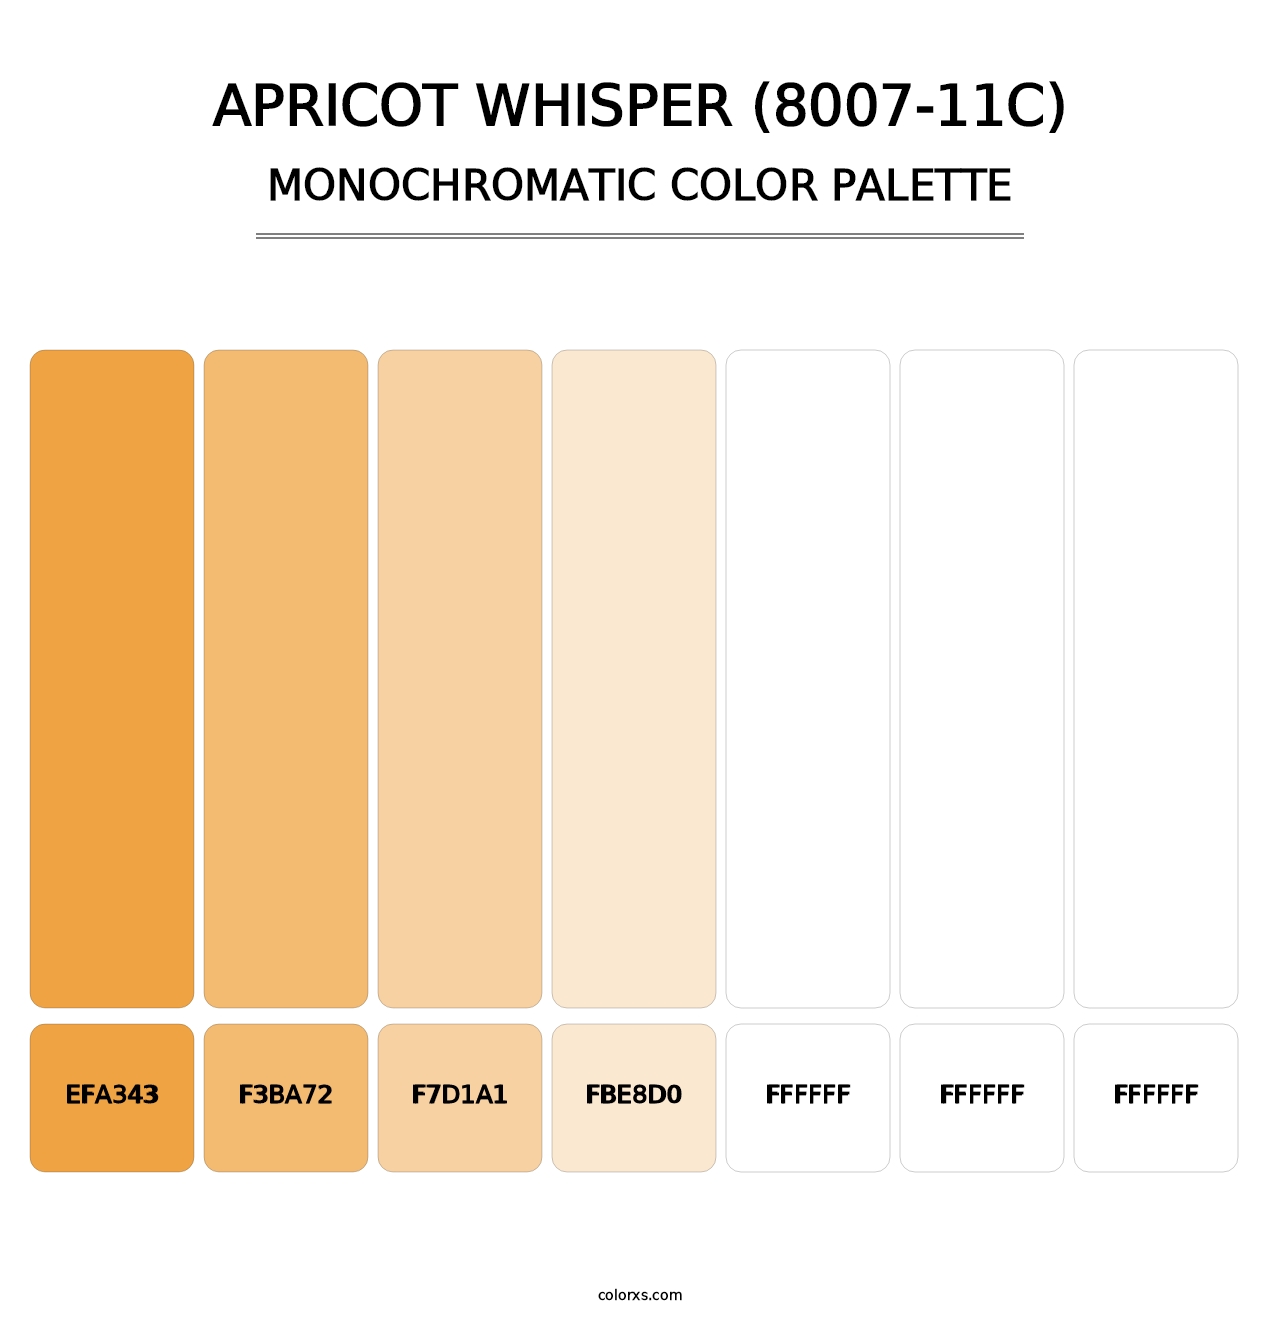 Apricot Whisper (8007-11C) - Monochromatic Color Palette